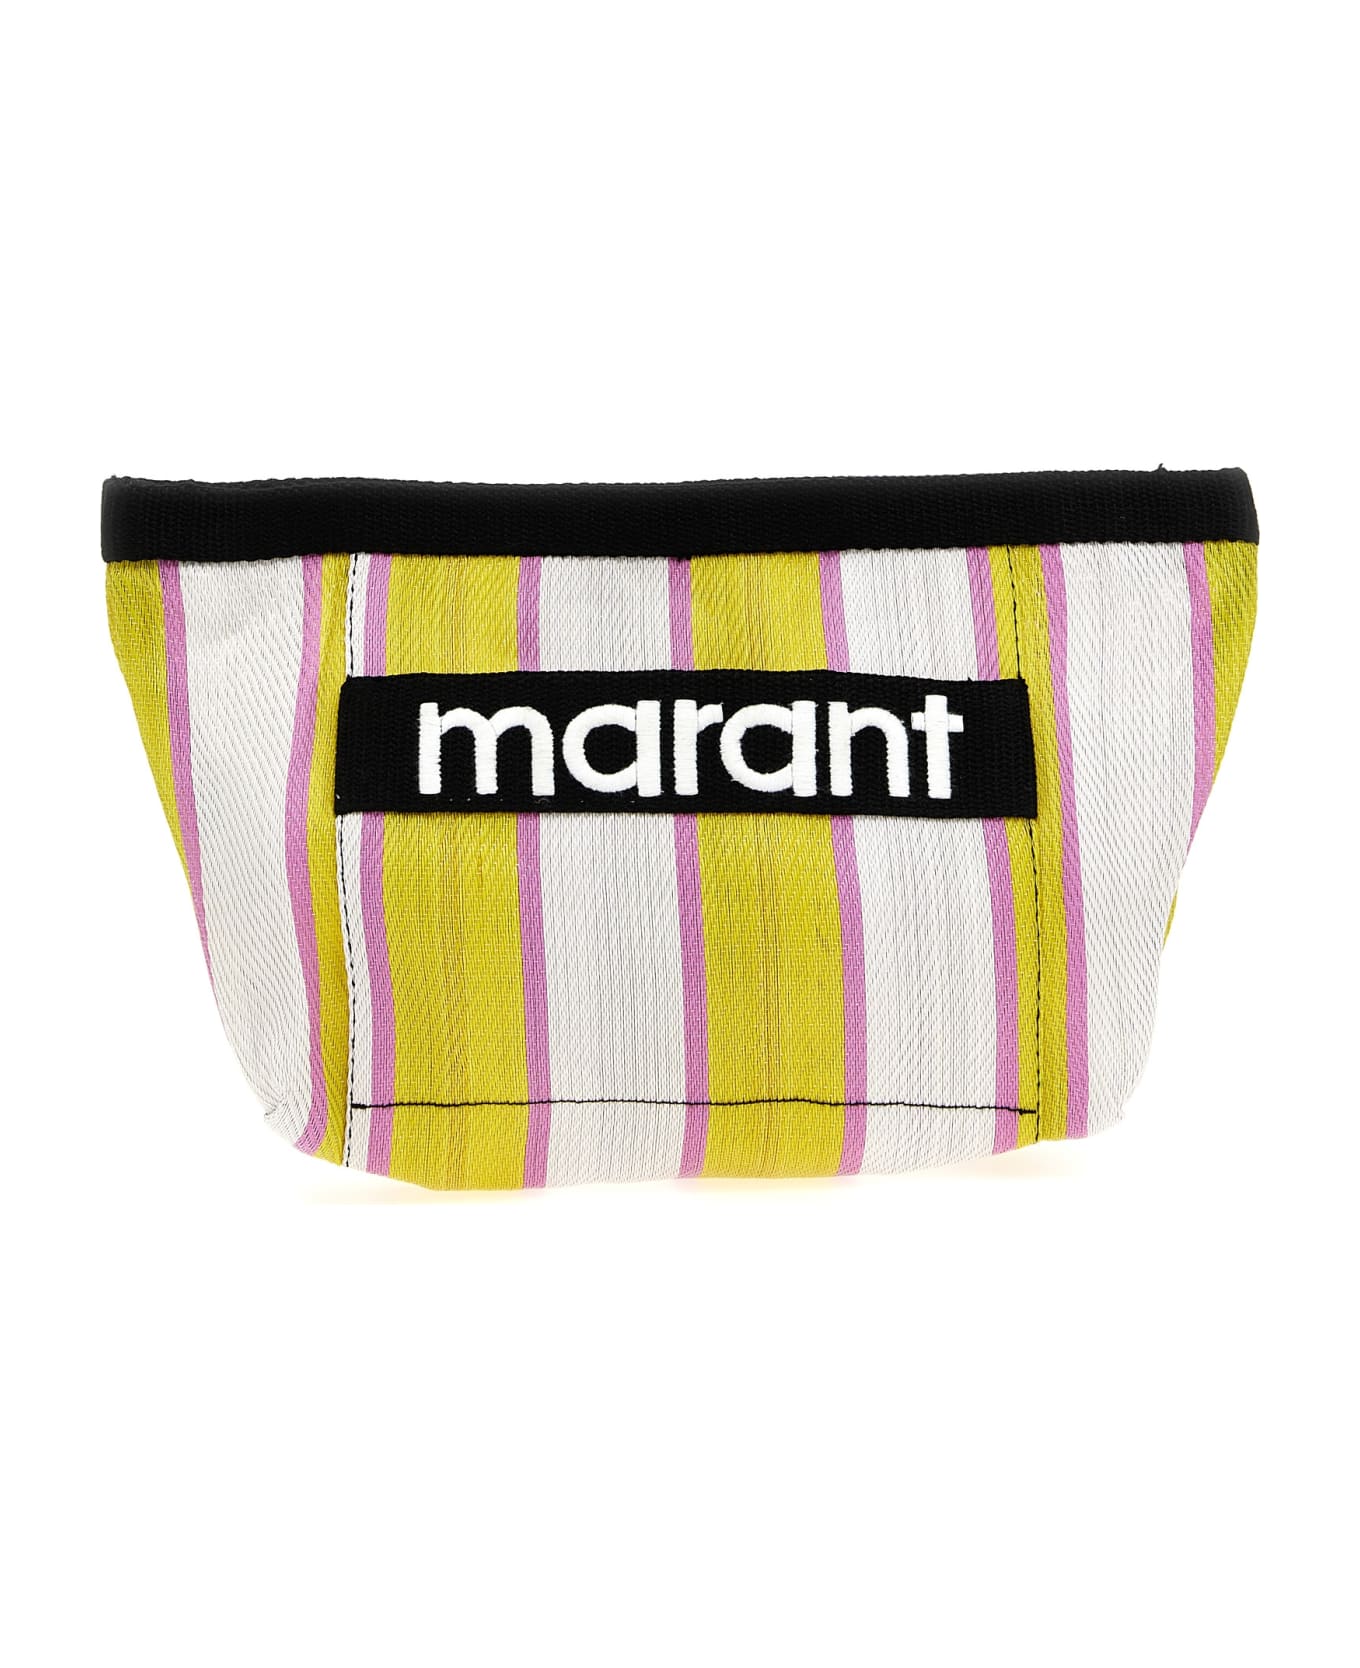 Isabel Marant Powden Nylon Clutch Bag - Multicolor